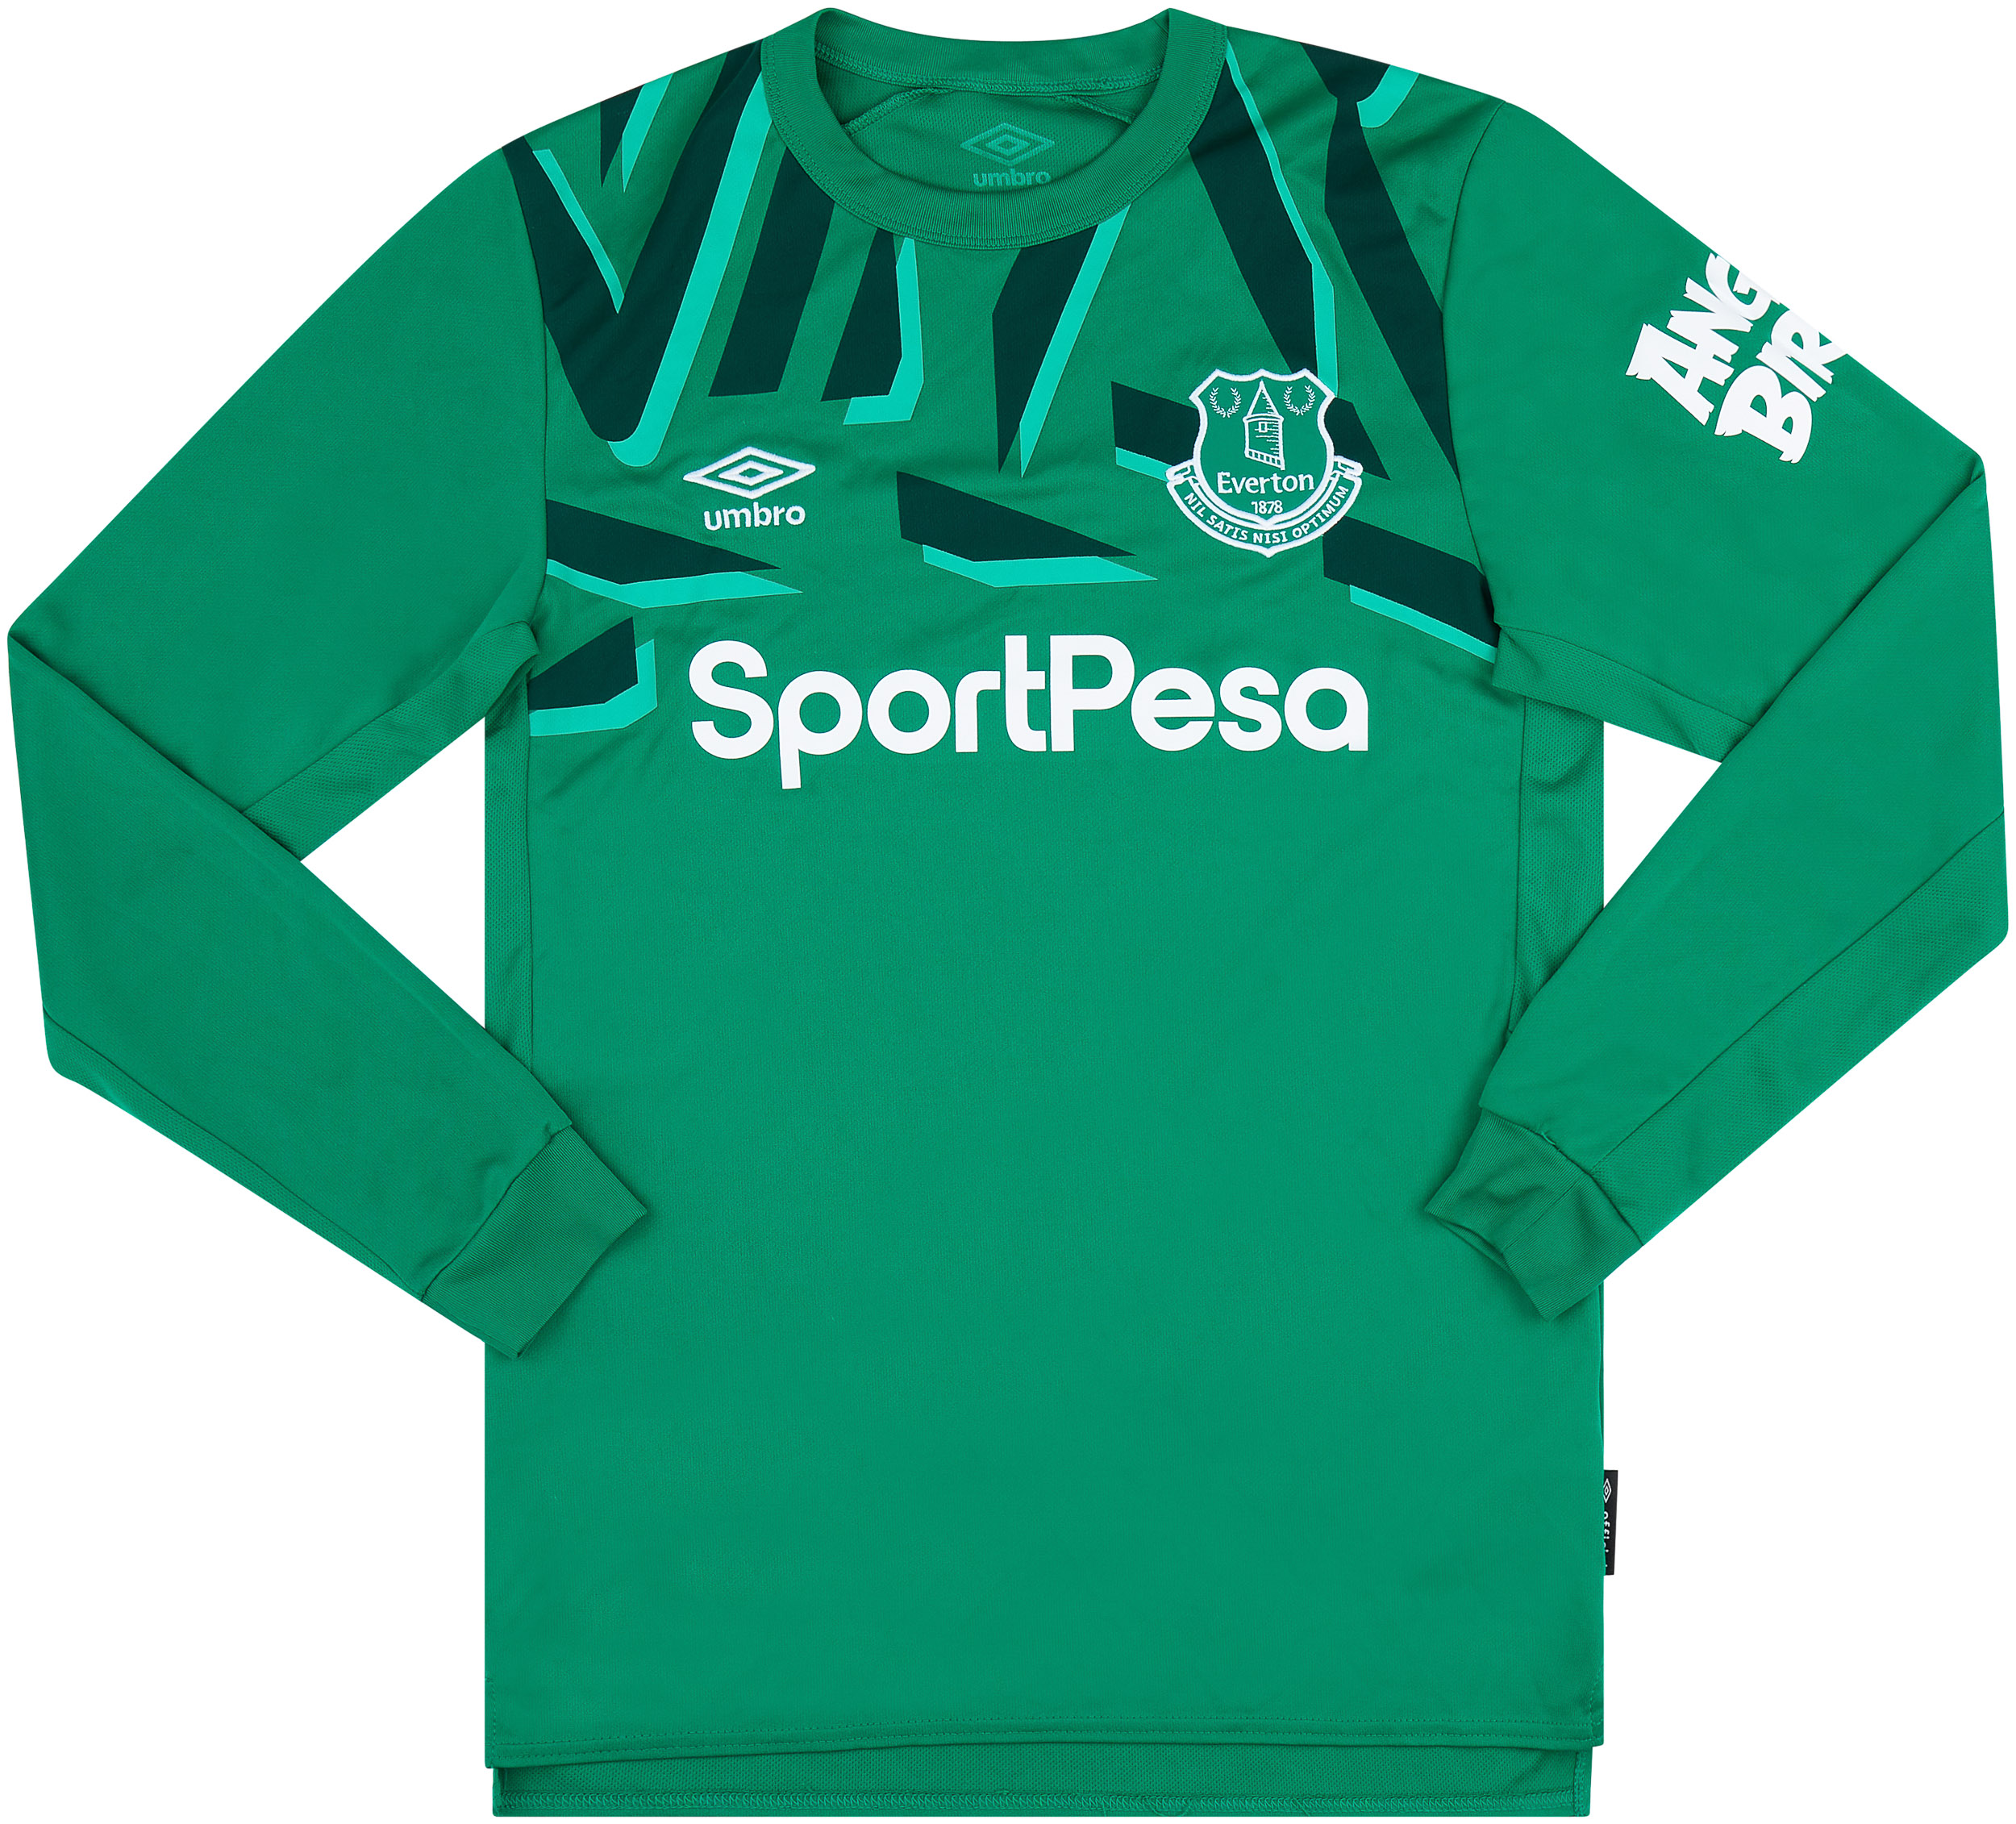 2019-20 Everton GK Shirt - 9/10 - ()